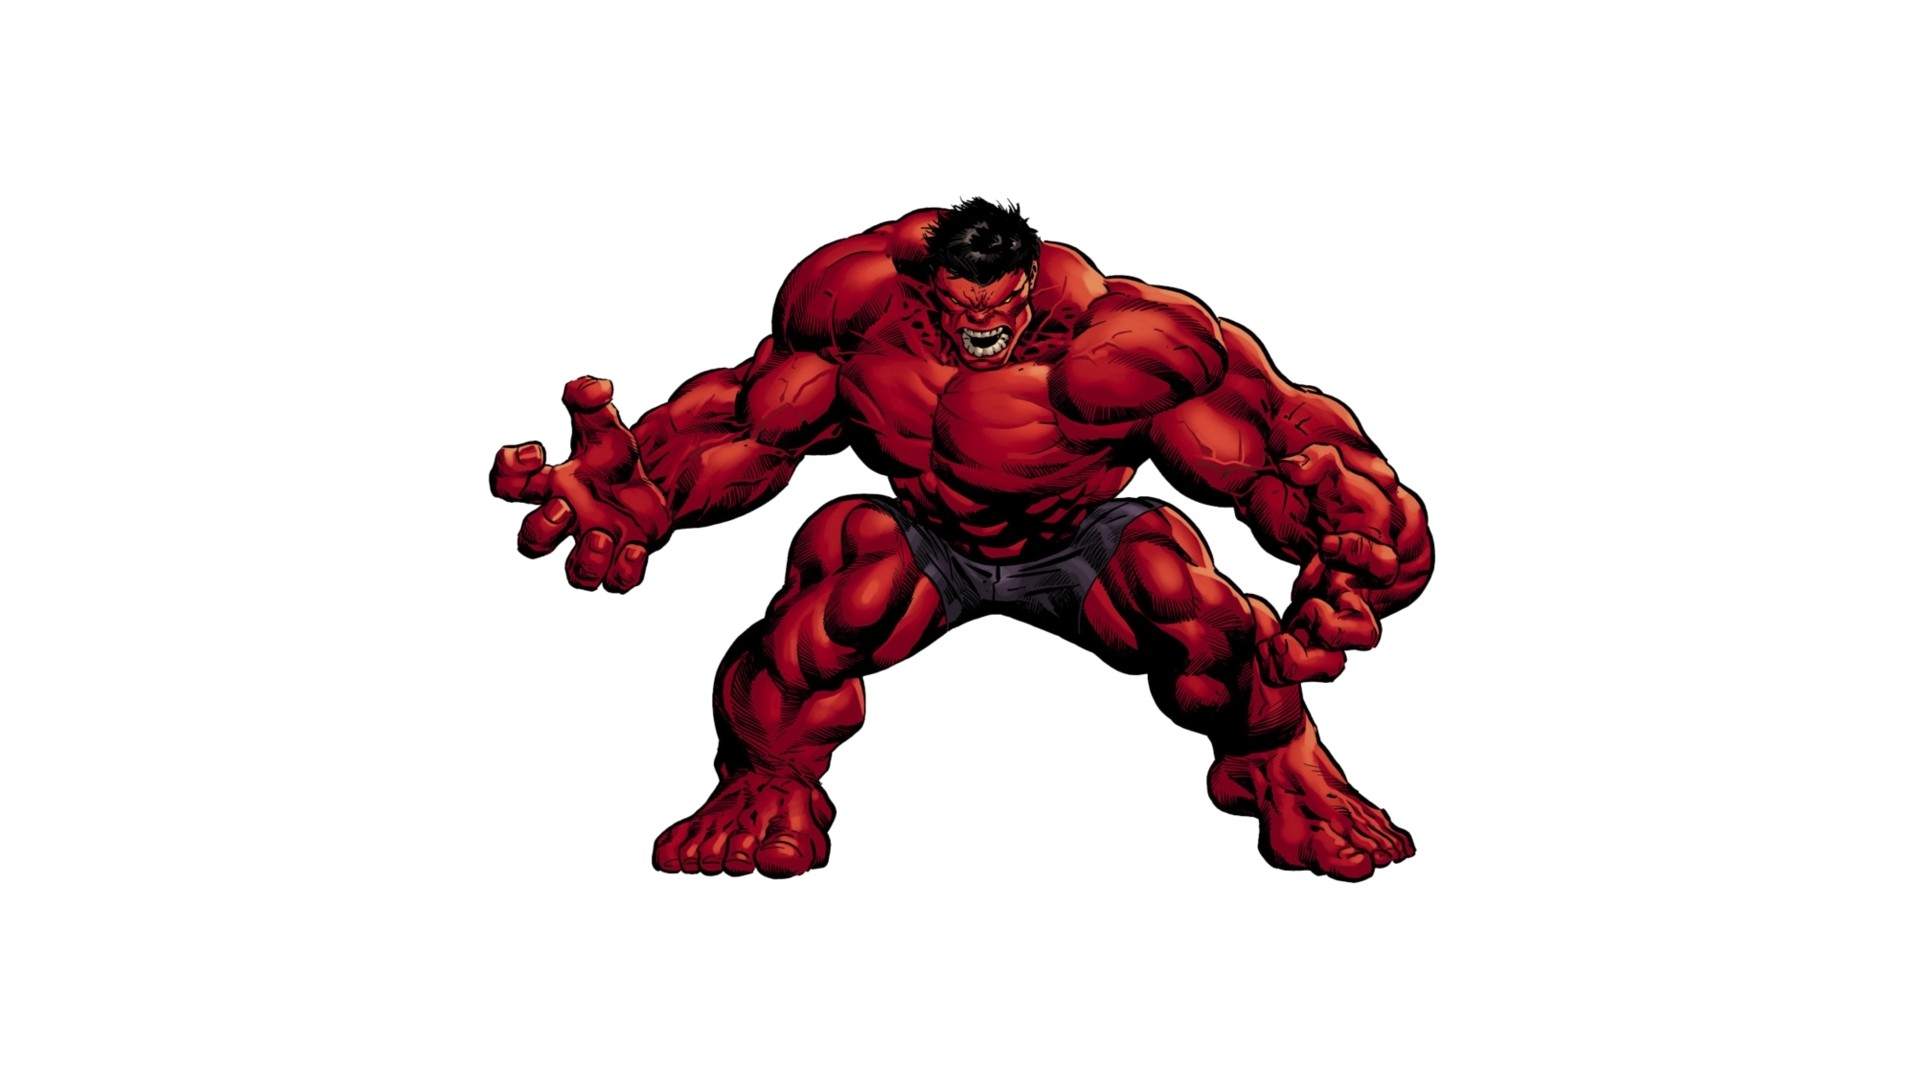 General 1920x1080 red hulk Hulk artwork comic art white background muscular muscles